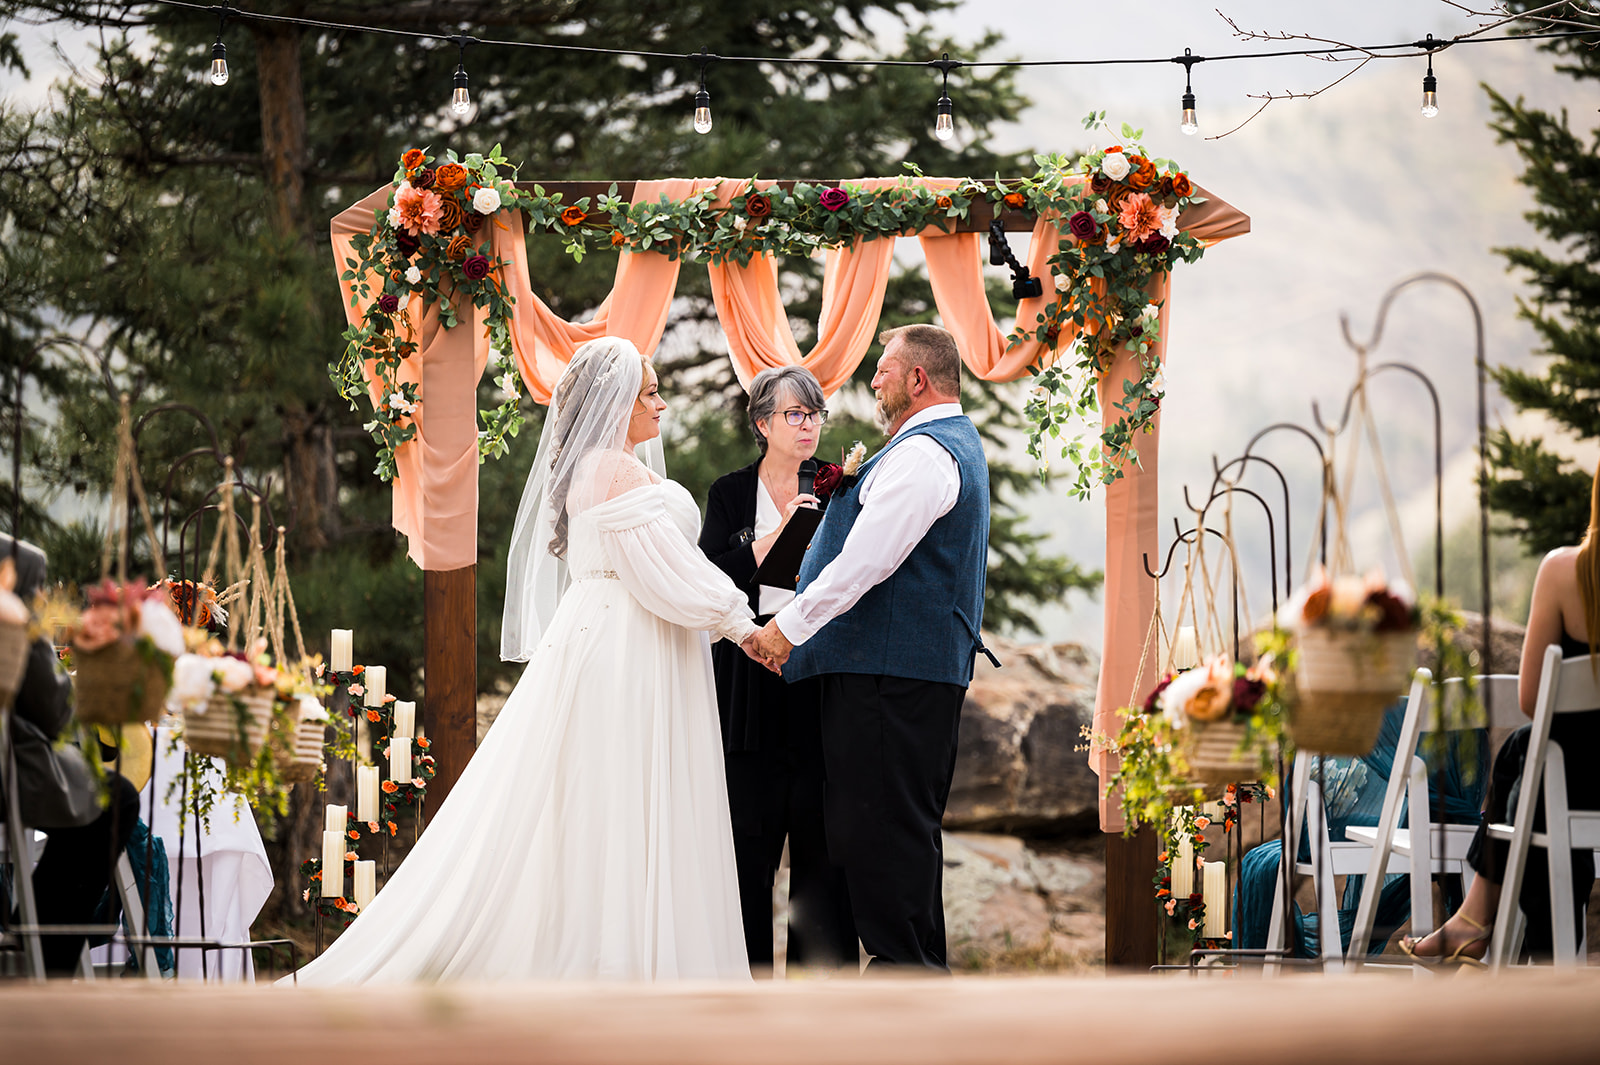 Bride and groom at ceremony Greenbriar Inn Boulder Colorado wedding photographer flowers holding hands